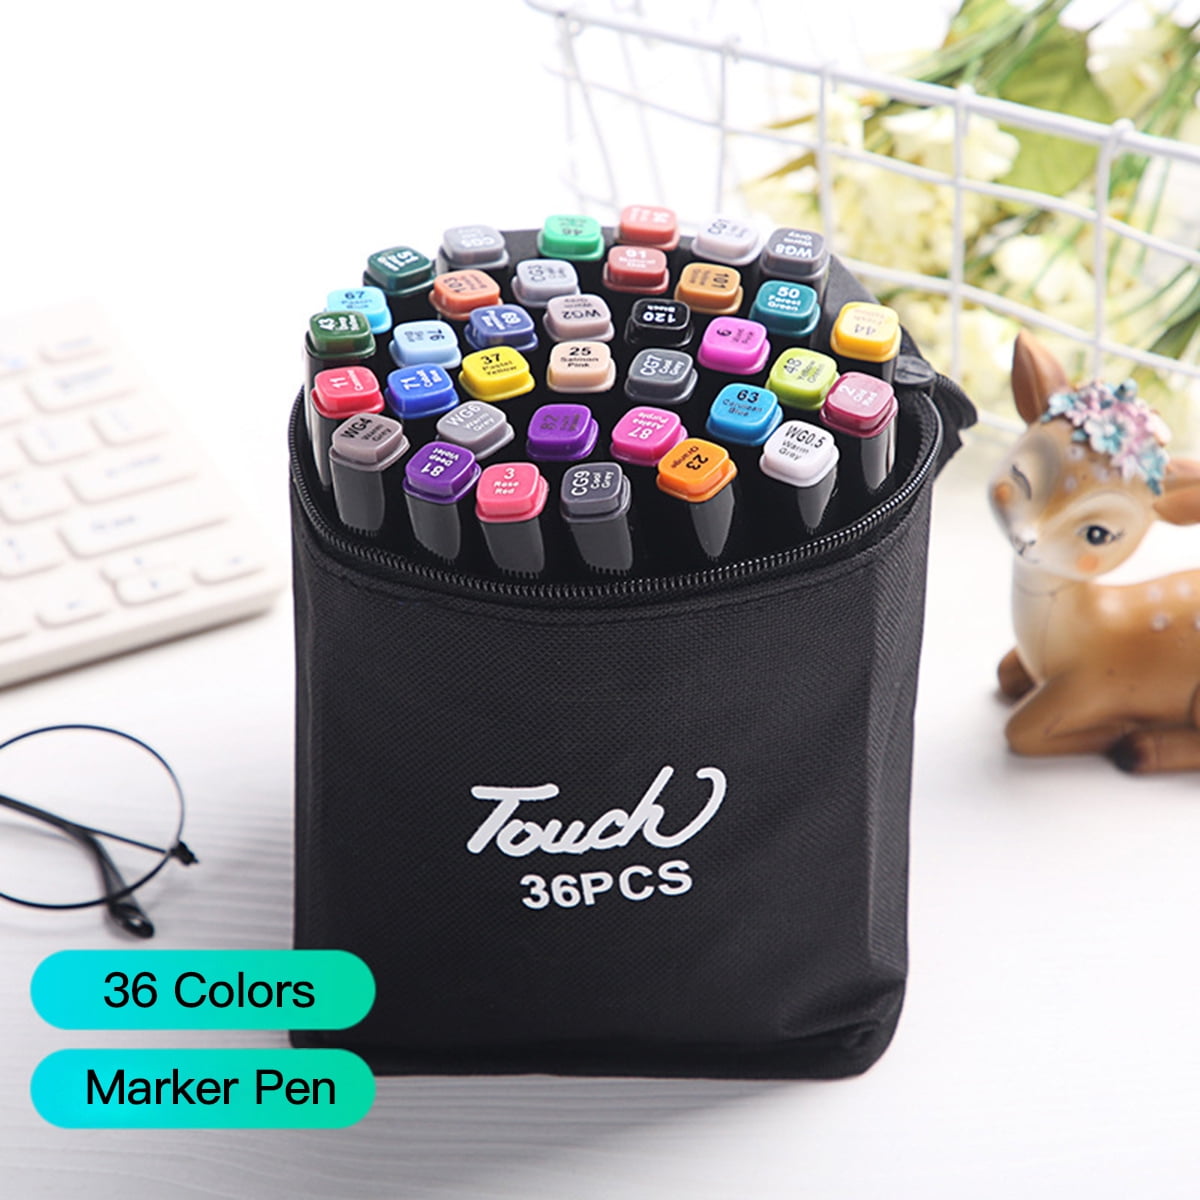 Art Markers Dual Brush Pens for Coloring, 168 Artist Colored Marker Set, Fine and Brush Tip Pen Art Supplier for Kids Adult Coloring Books, Bullet